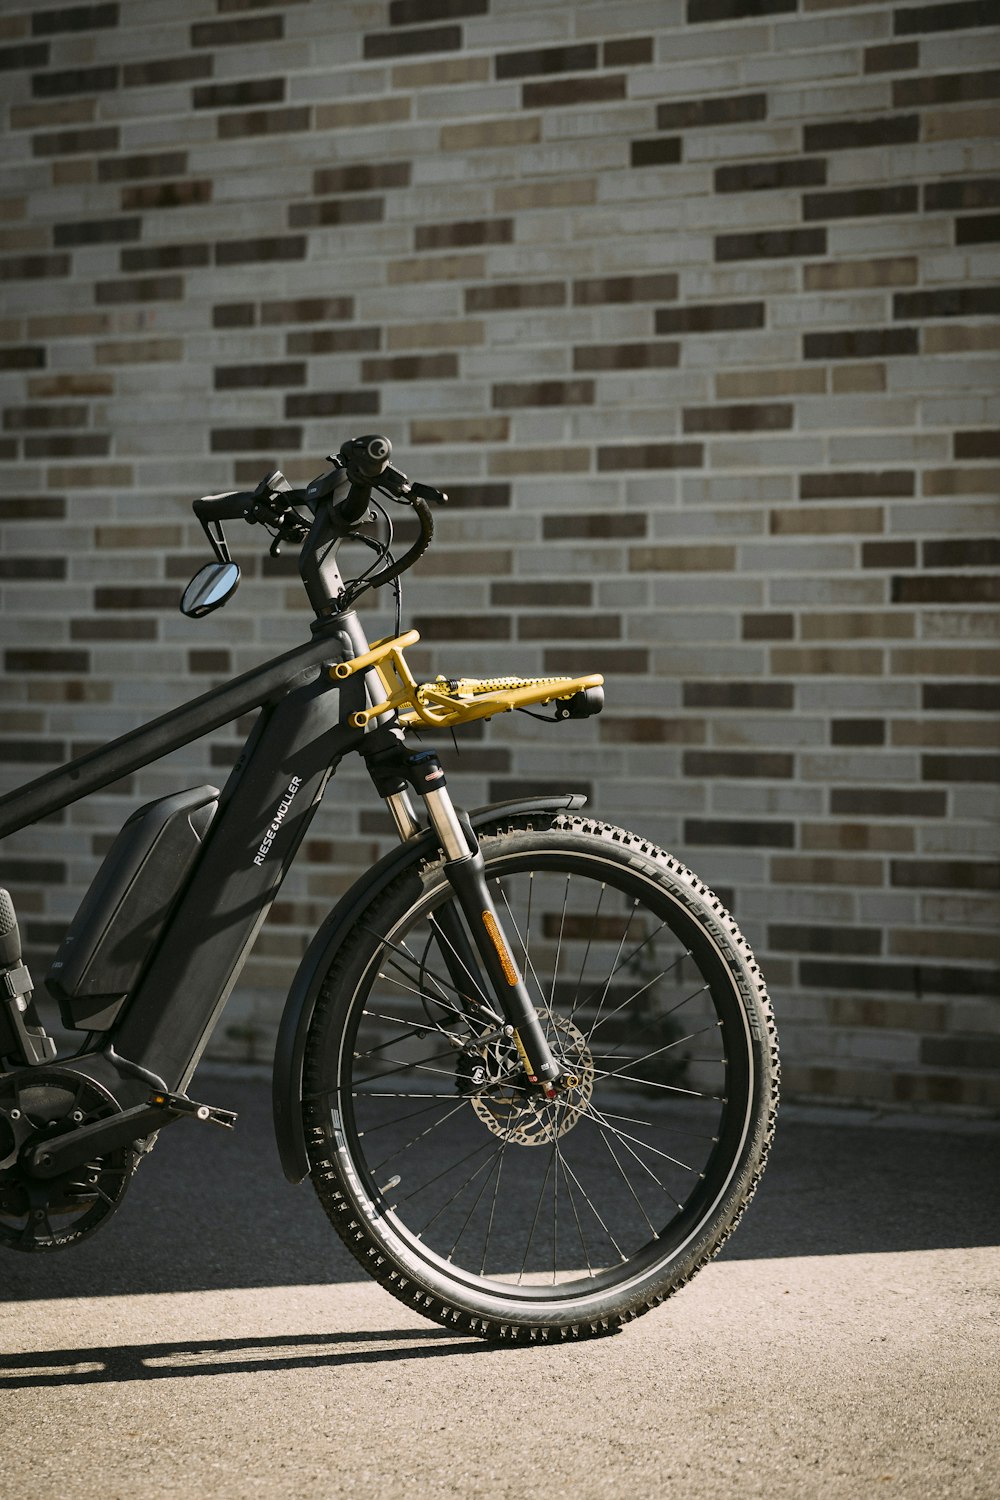 a bike parked next to a brick wall